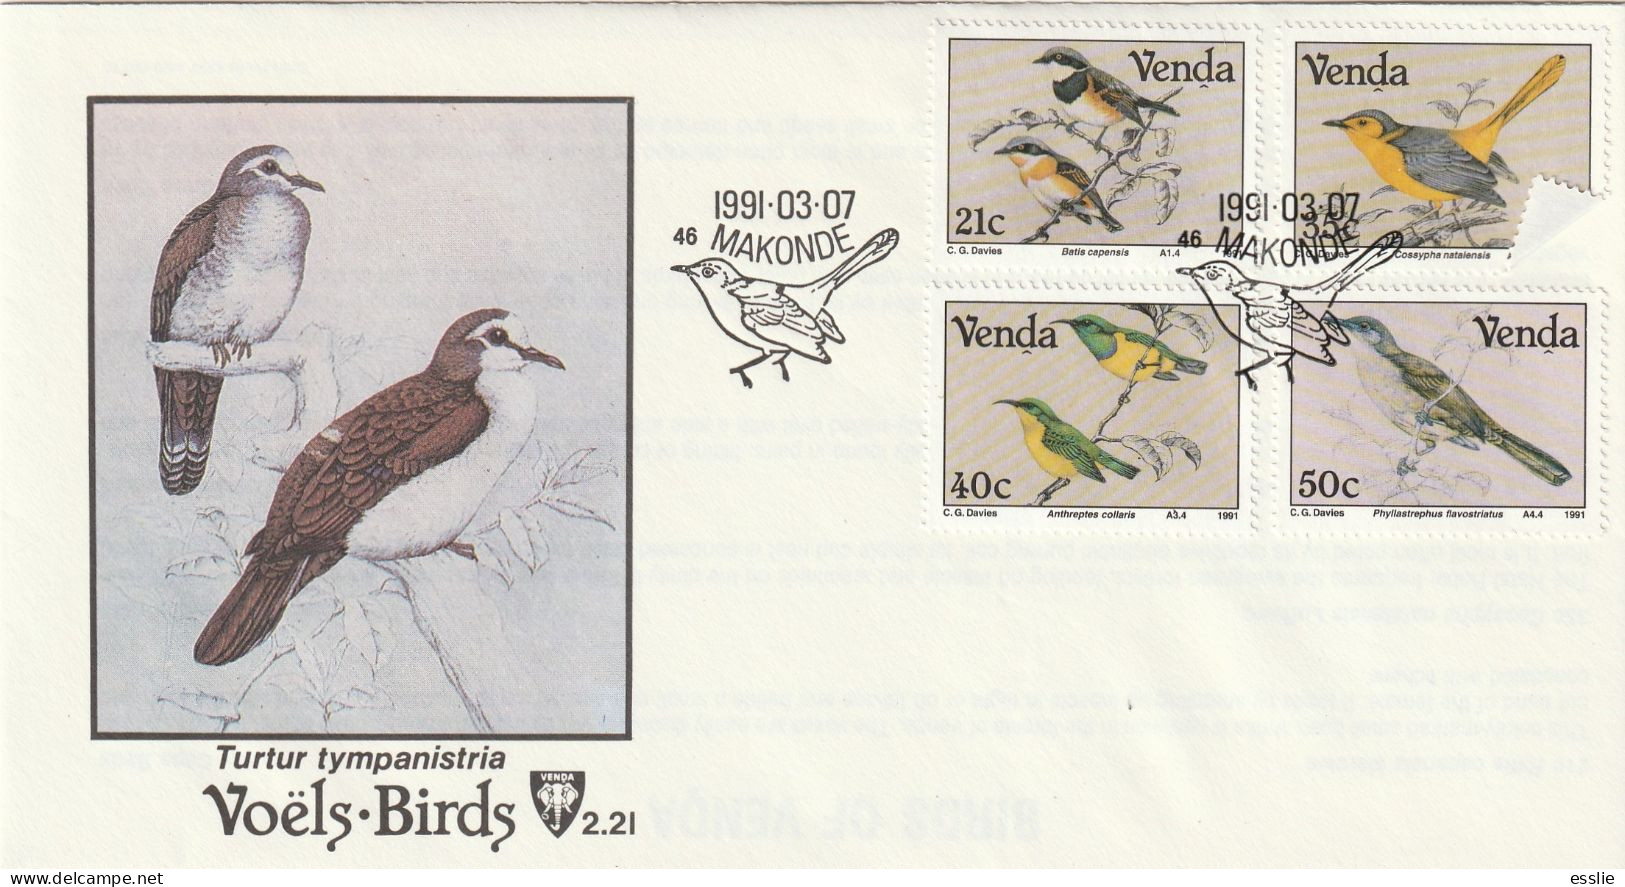 Venda - 1991 - Birds Vogel - Paintings By Claude Finch-Davis - Complete Set On FDC - Venda